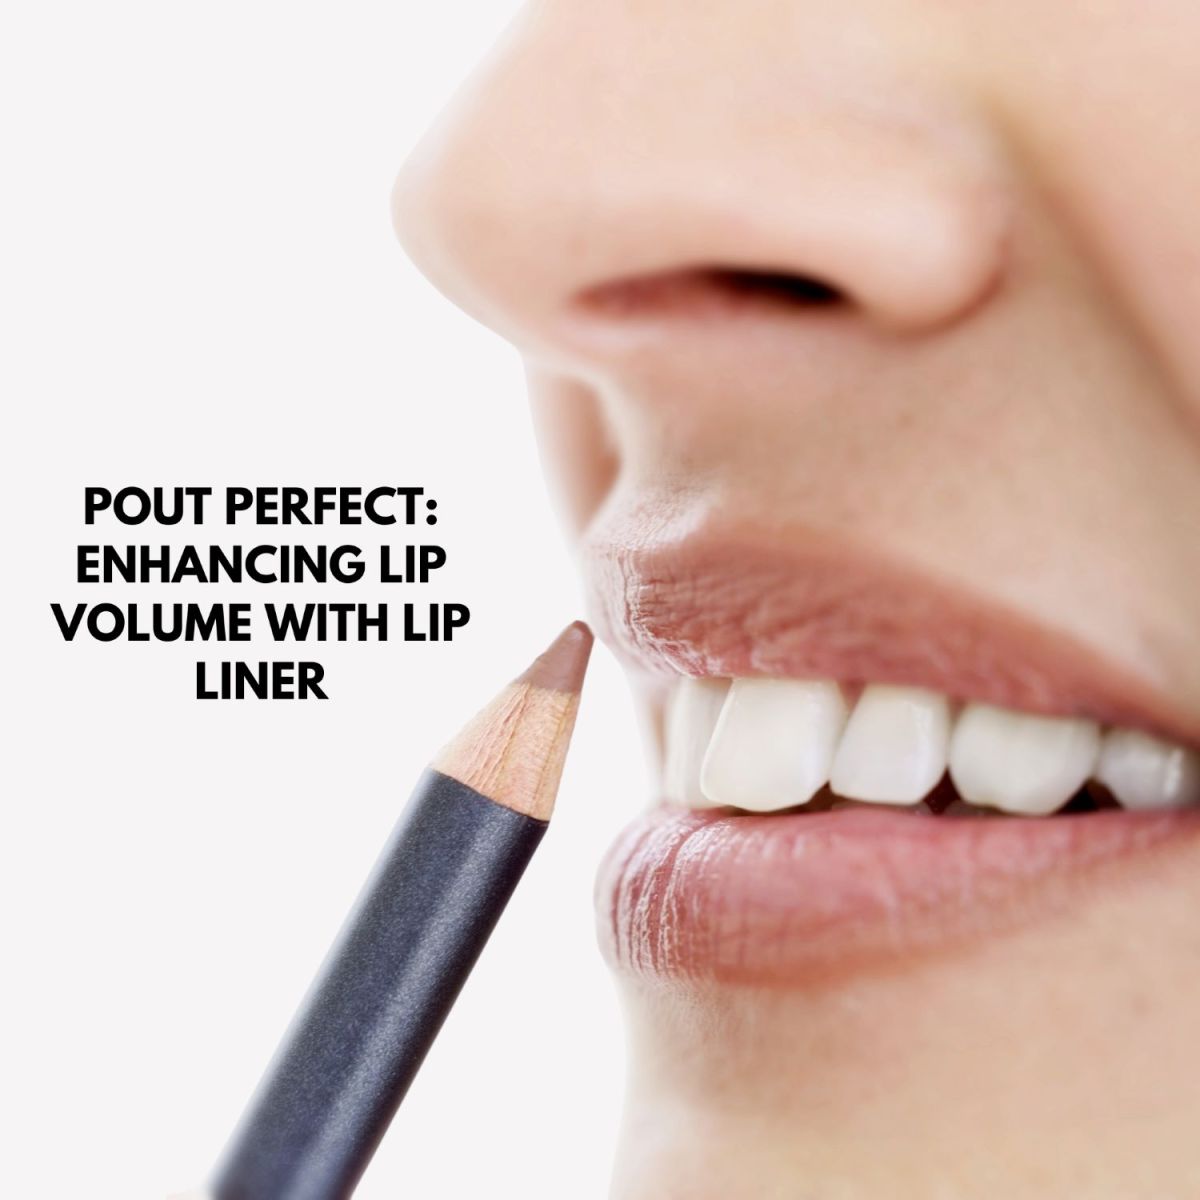 Enhance lip volume with lip liner